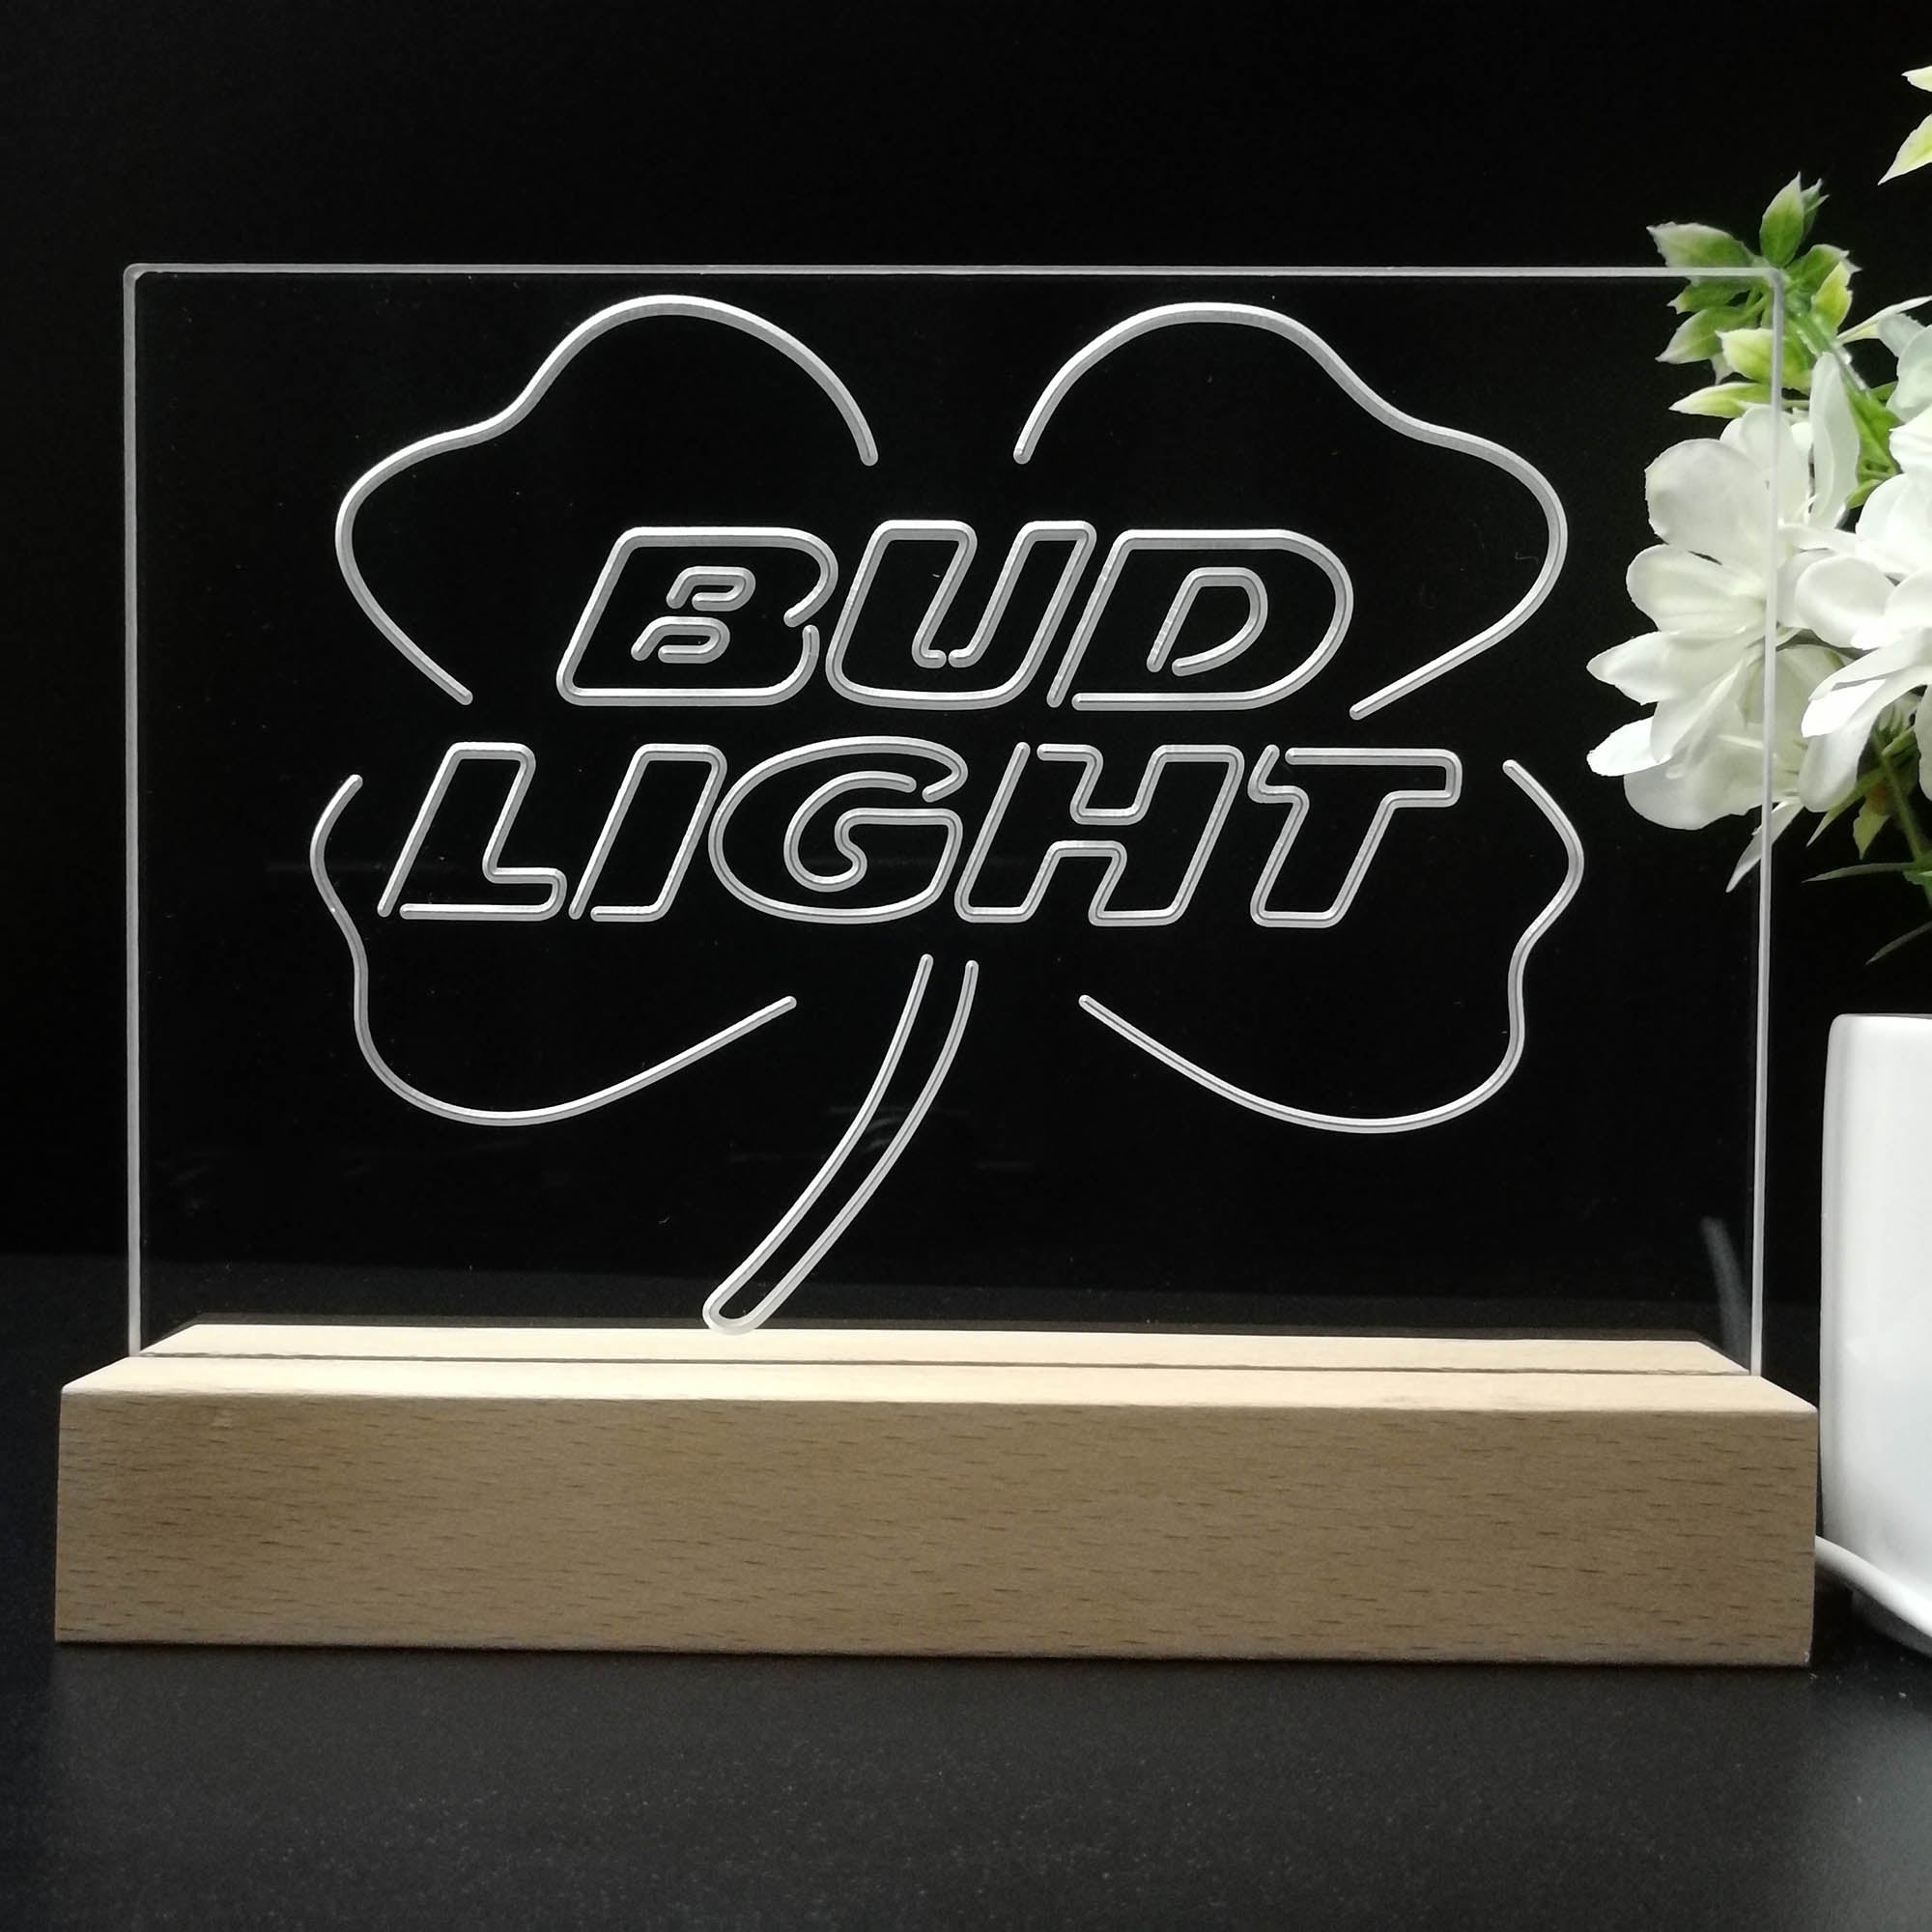 Bud Lights Clover Beer Neon Sign Pub Bar Lamp